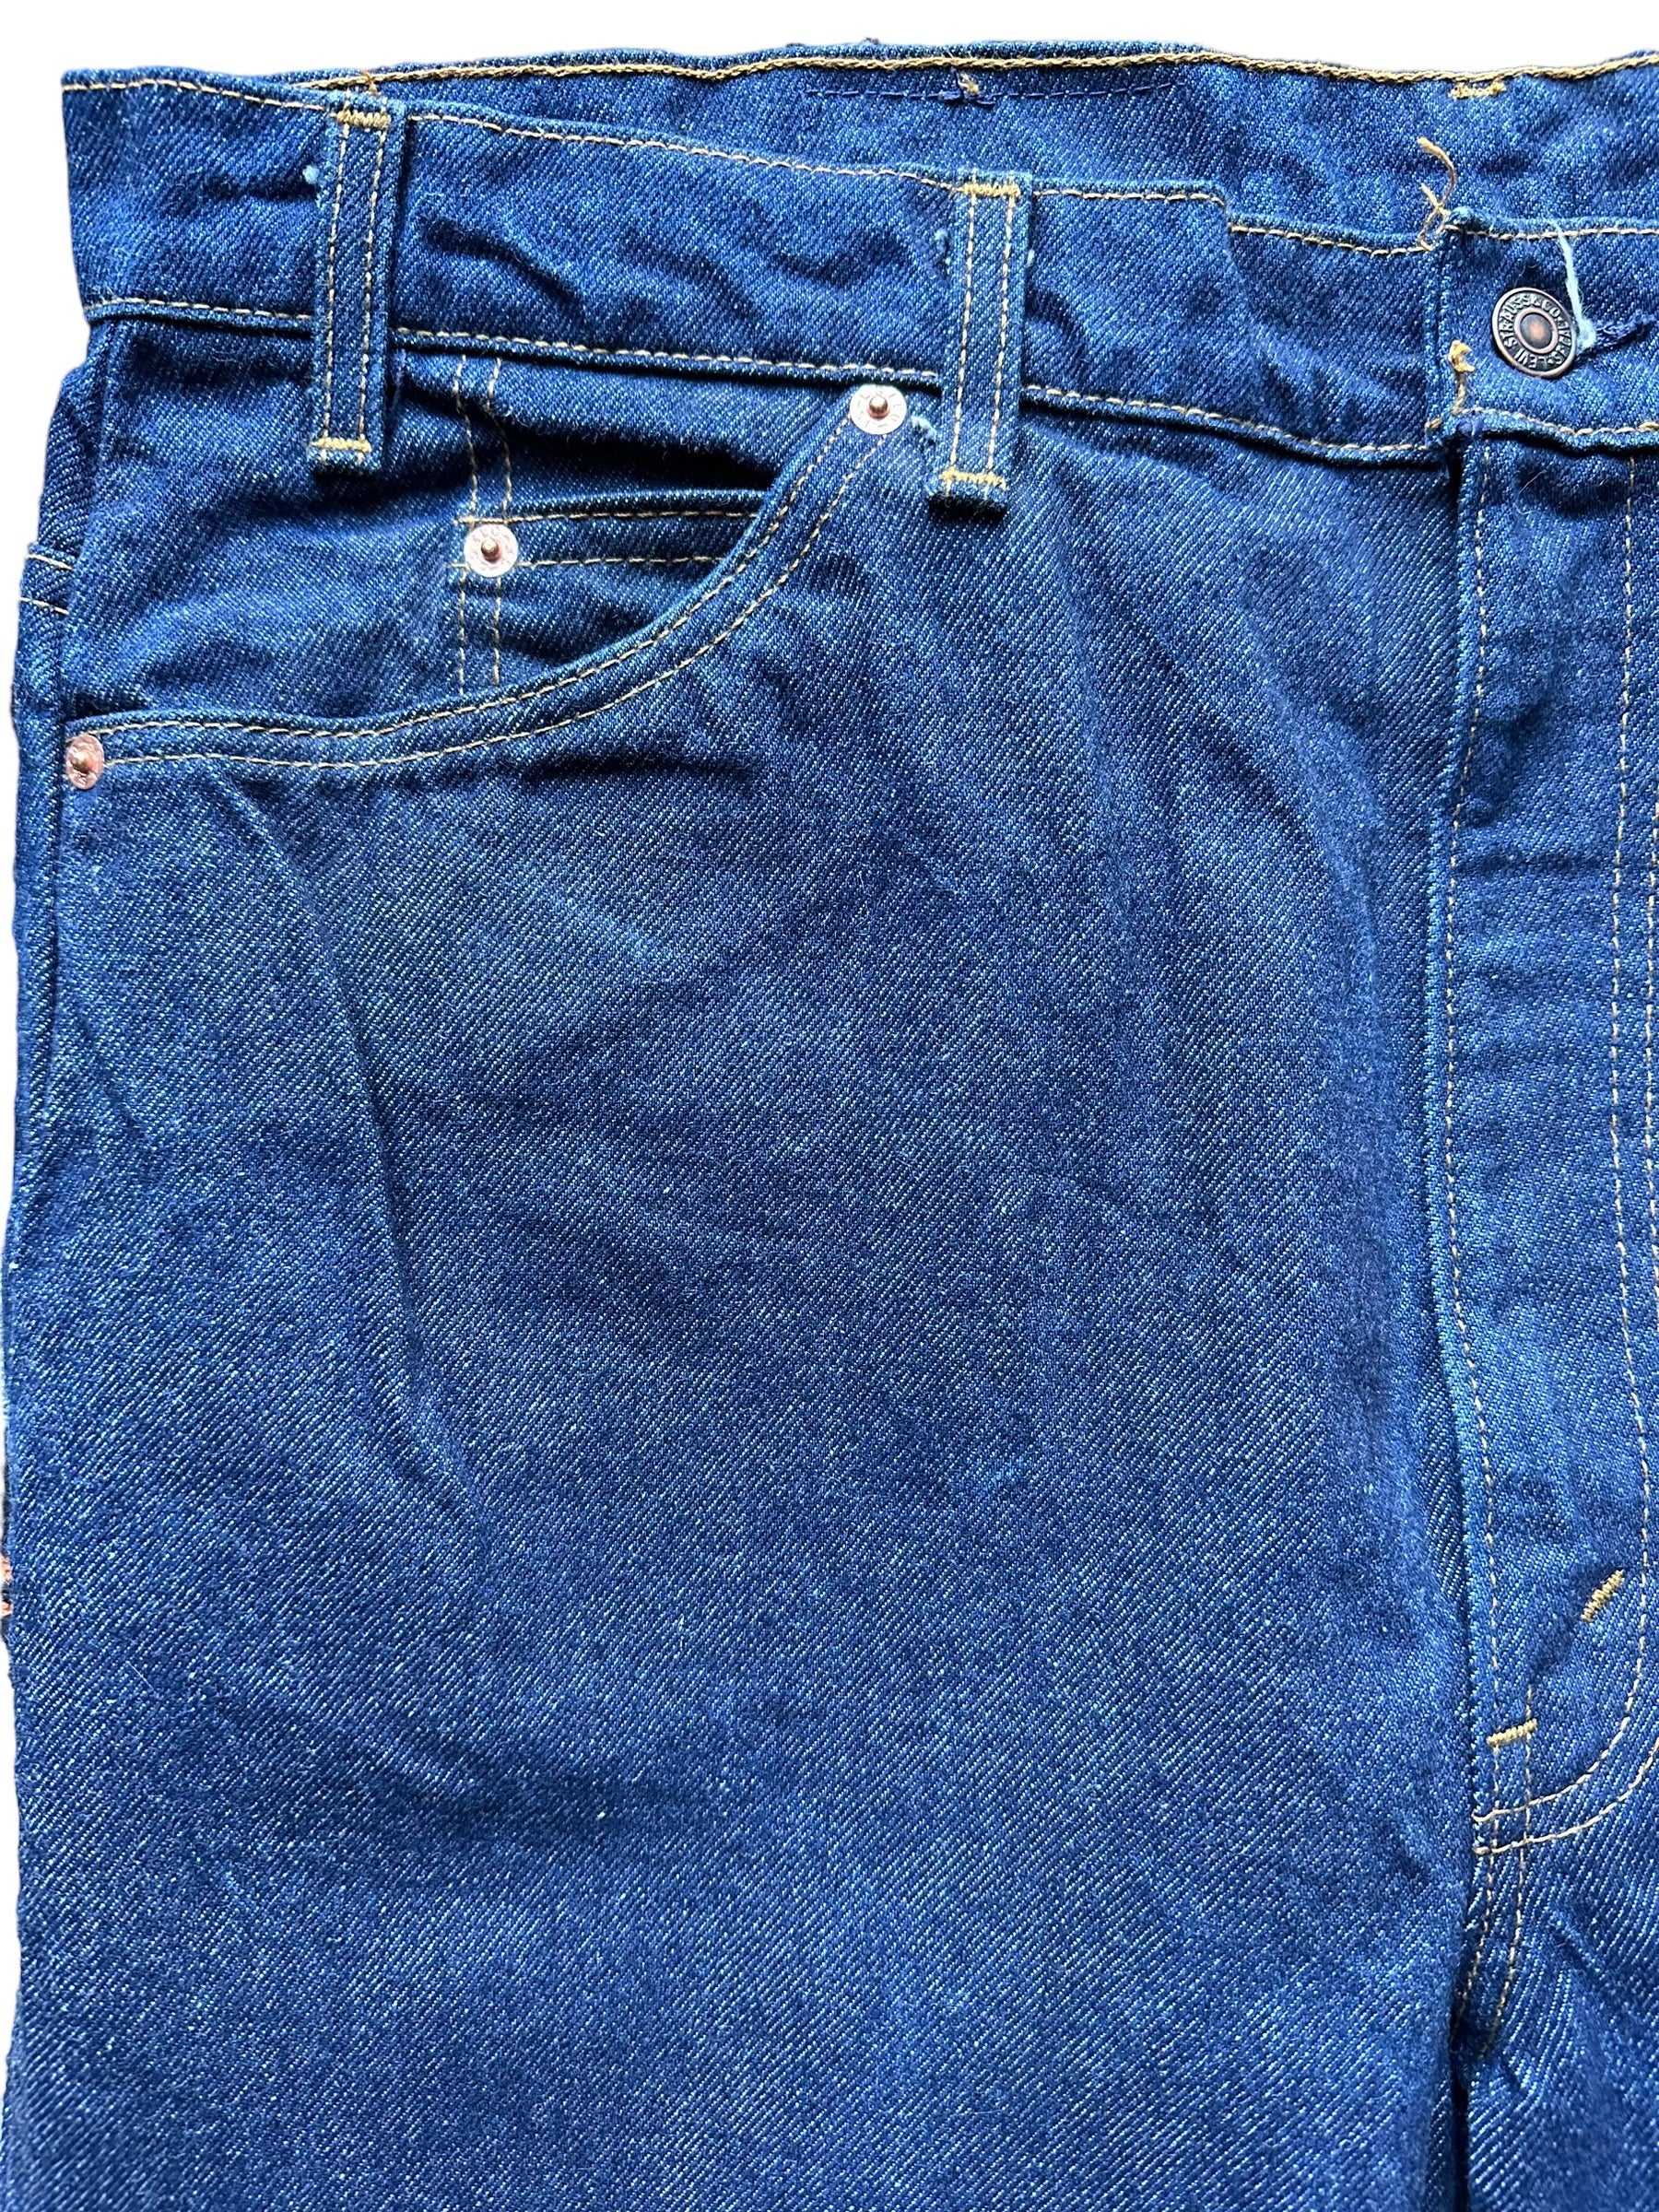 Front right pocket view of Deadstock 90s USA Levi's 501 Black Jeans 26x33 | Seattle Deadstock Vintage Jeans | Barn Owl Vintage Denim